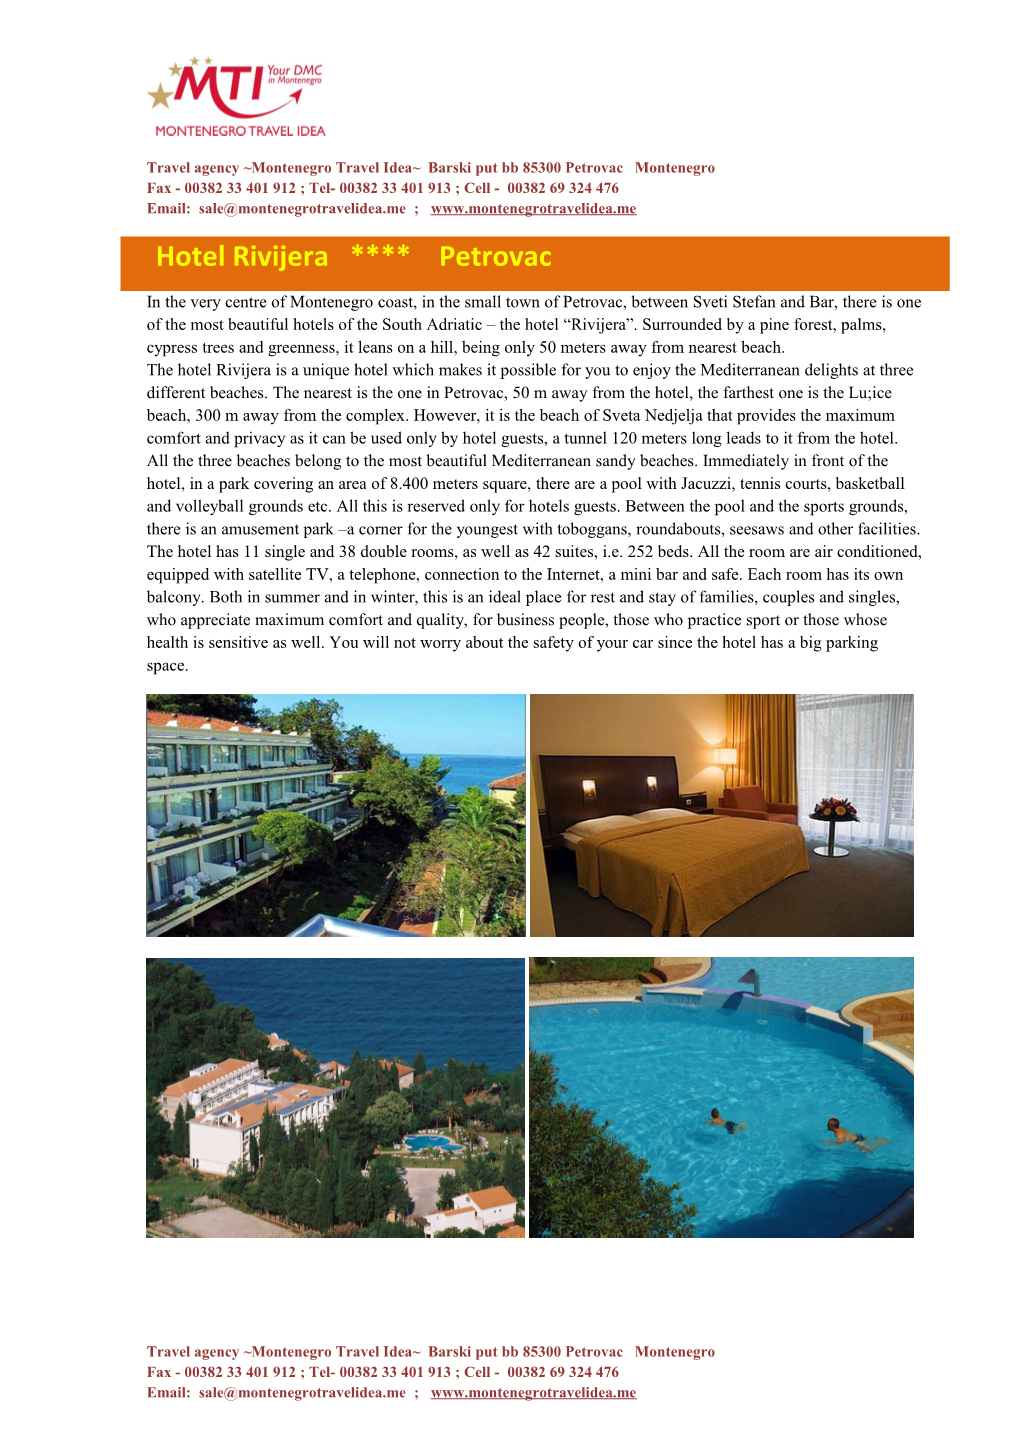 Hotel Villa Montenegro 5*